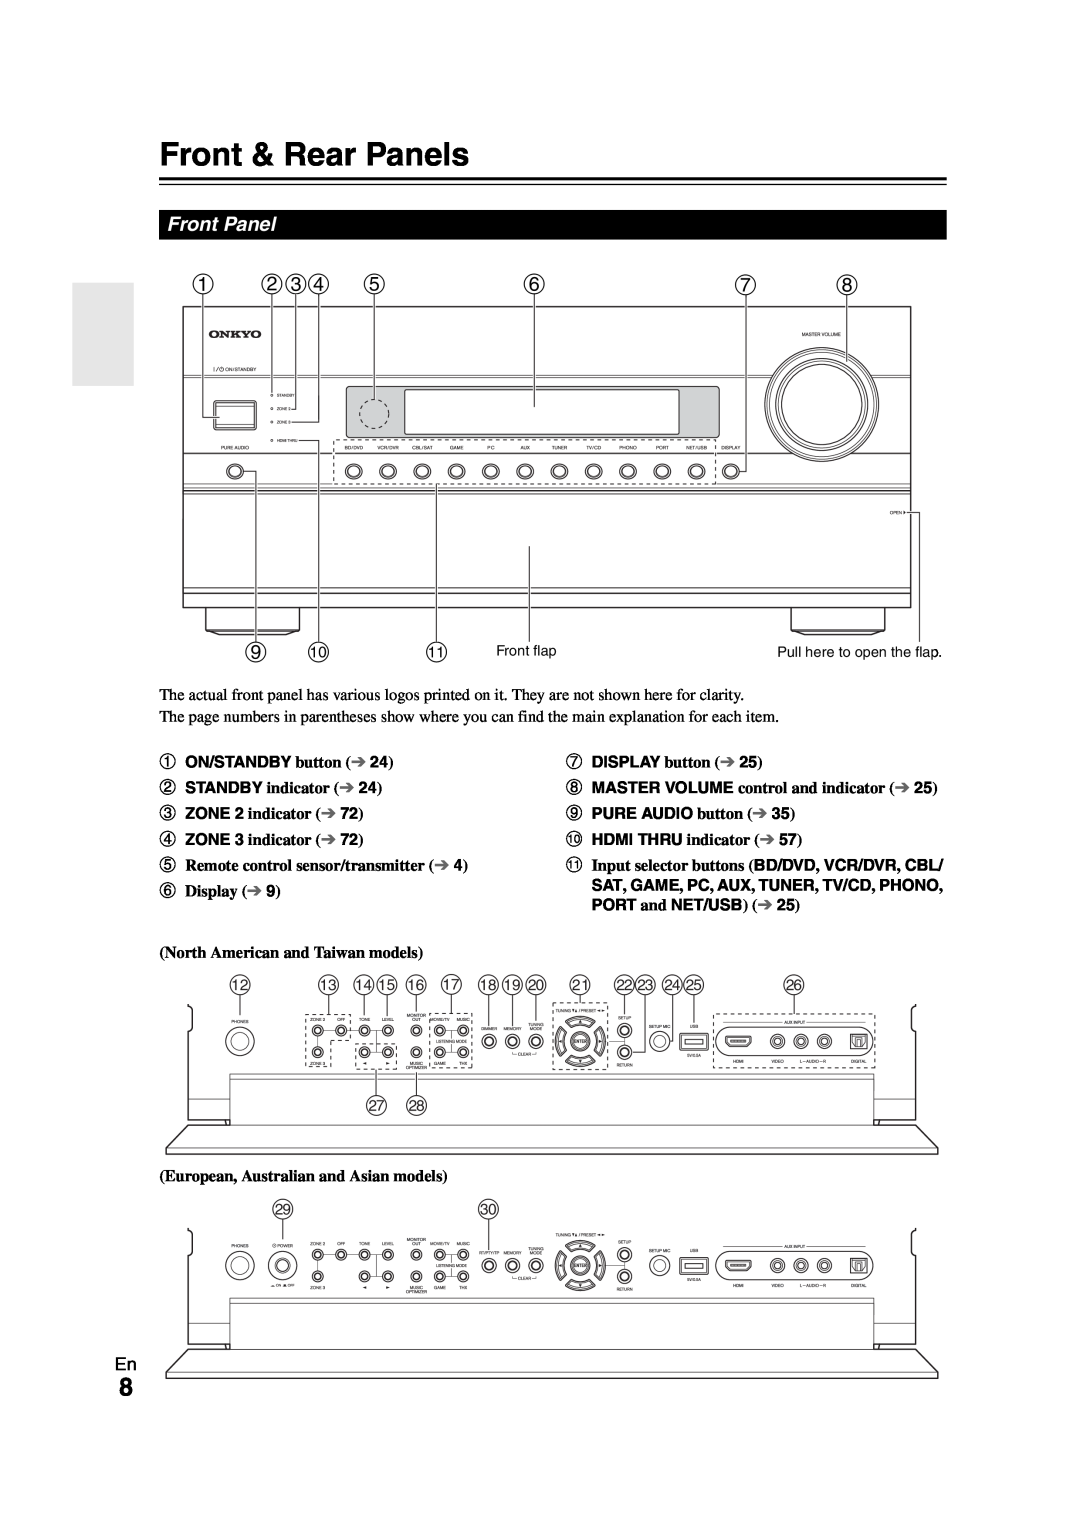 Onkyo TX-NR808 instruction manual Front & Rear Panels, m no p q rst u vw xy 